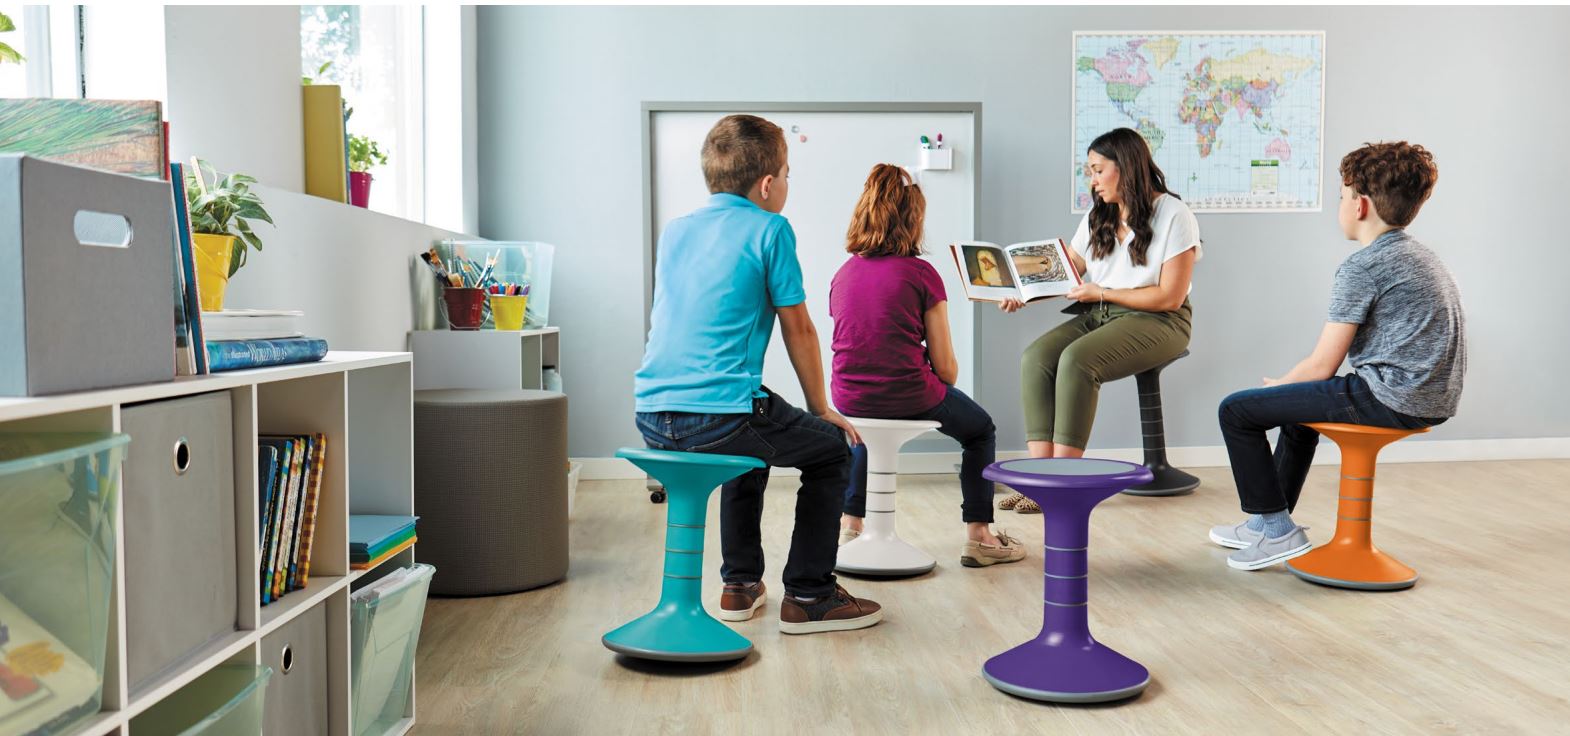 3 children and teacher sitting on ricochet stools